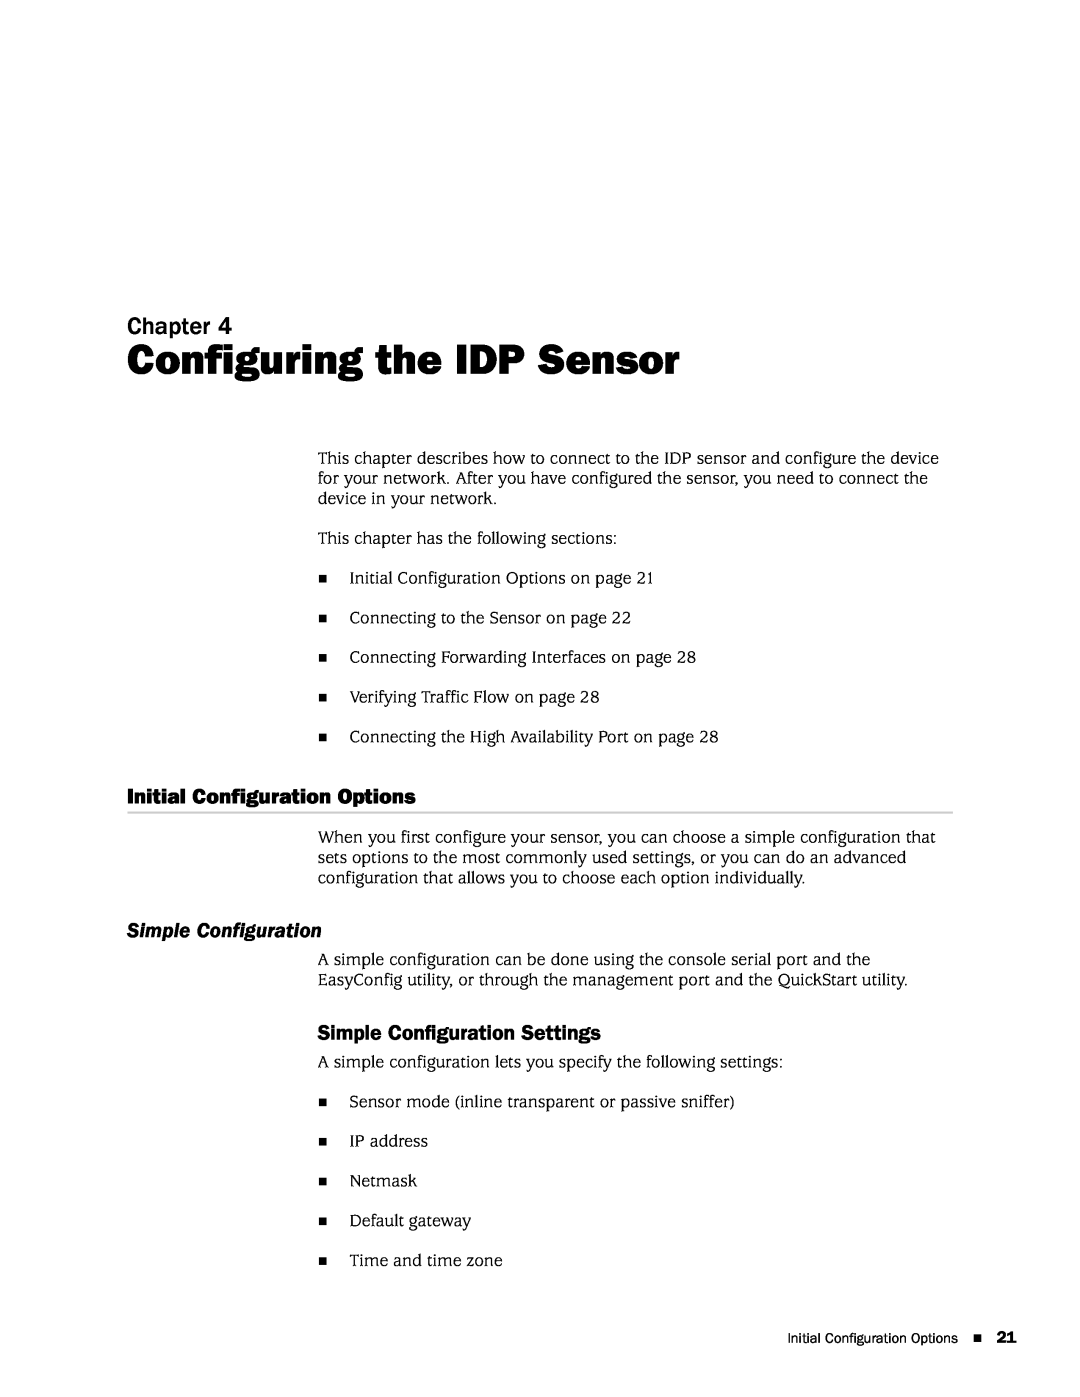 Juniper Networks IDP75, IDP250 Configuring the IDP Sensor, Initial Configuration Options, Simple Configuration, Chapter 